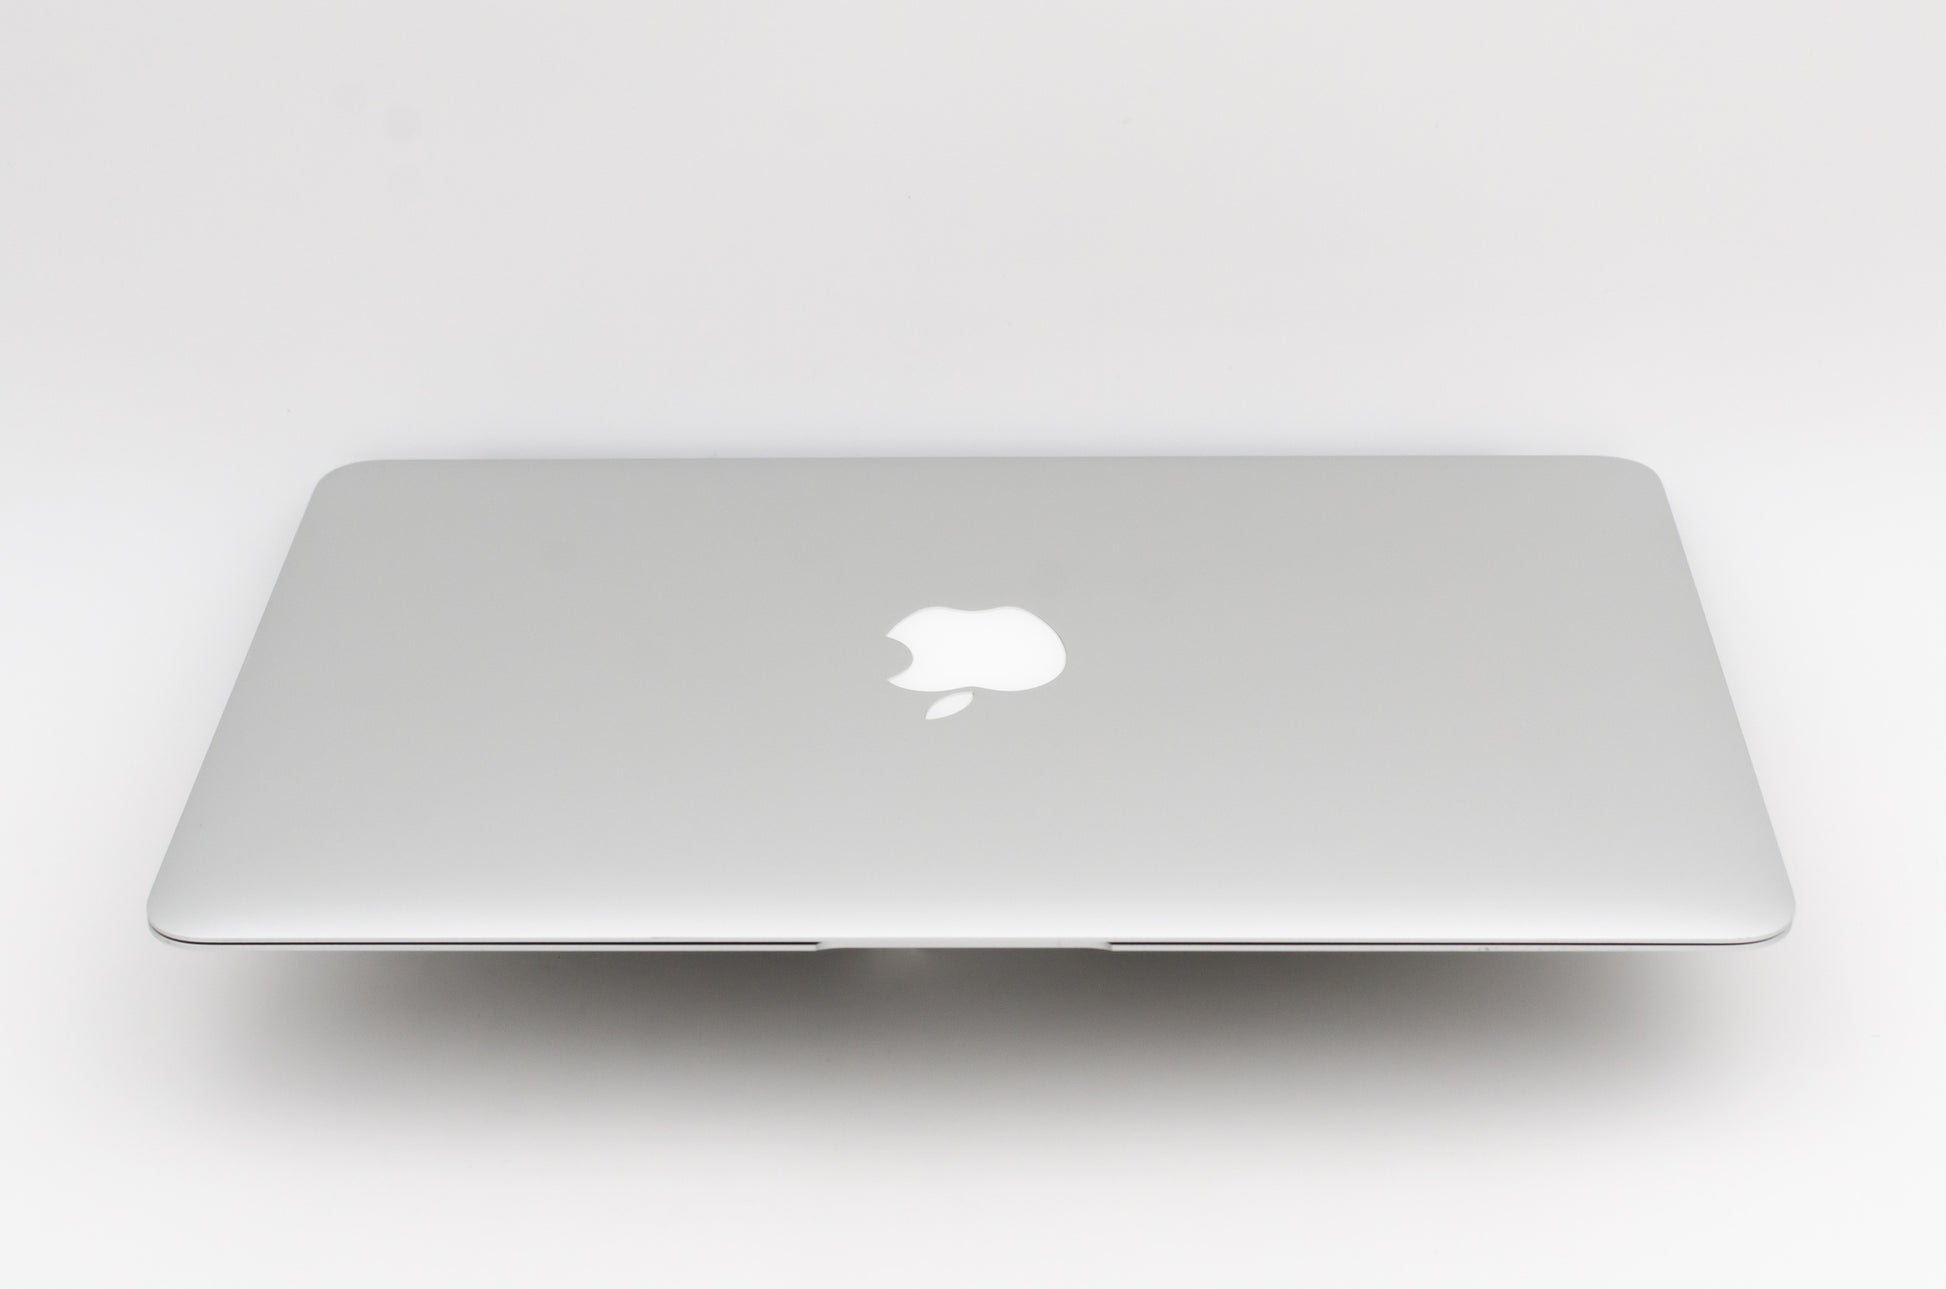 apple-mid-2011-11.6-inch-macbook-air-a1370-aluminum-dci5 - 1.6ghz processor, 2gb ram, hd 3000 - 348mb gpu-mc968ll/a-3